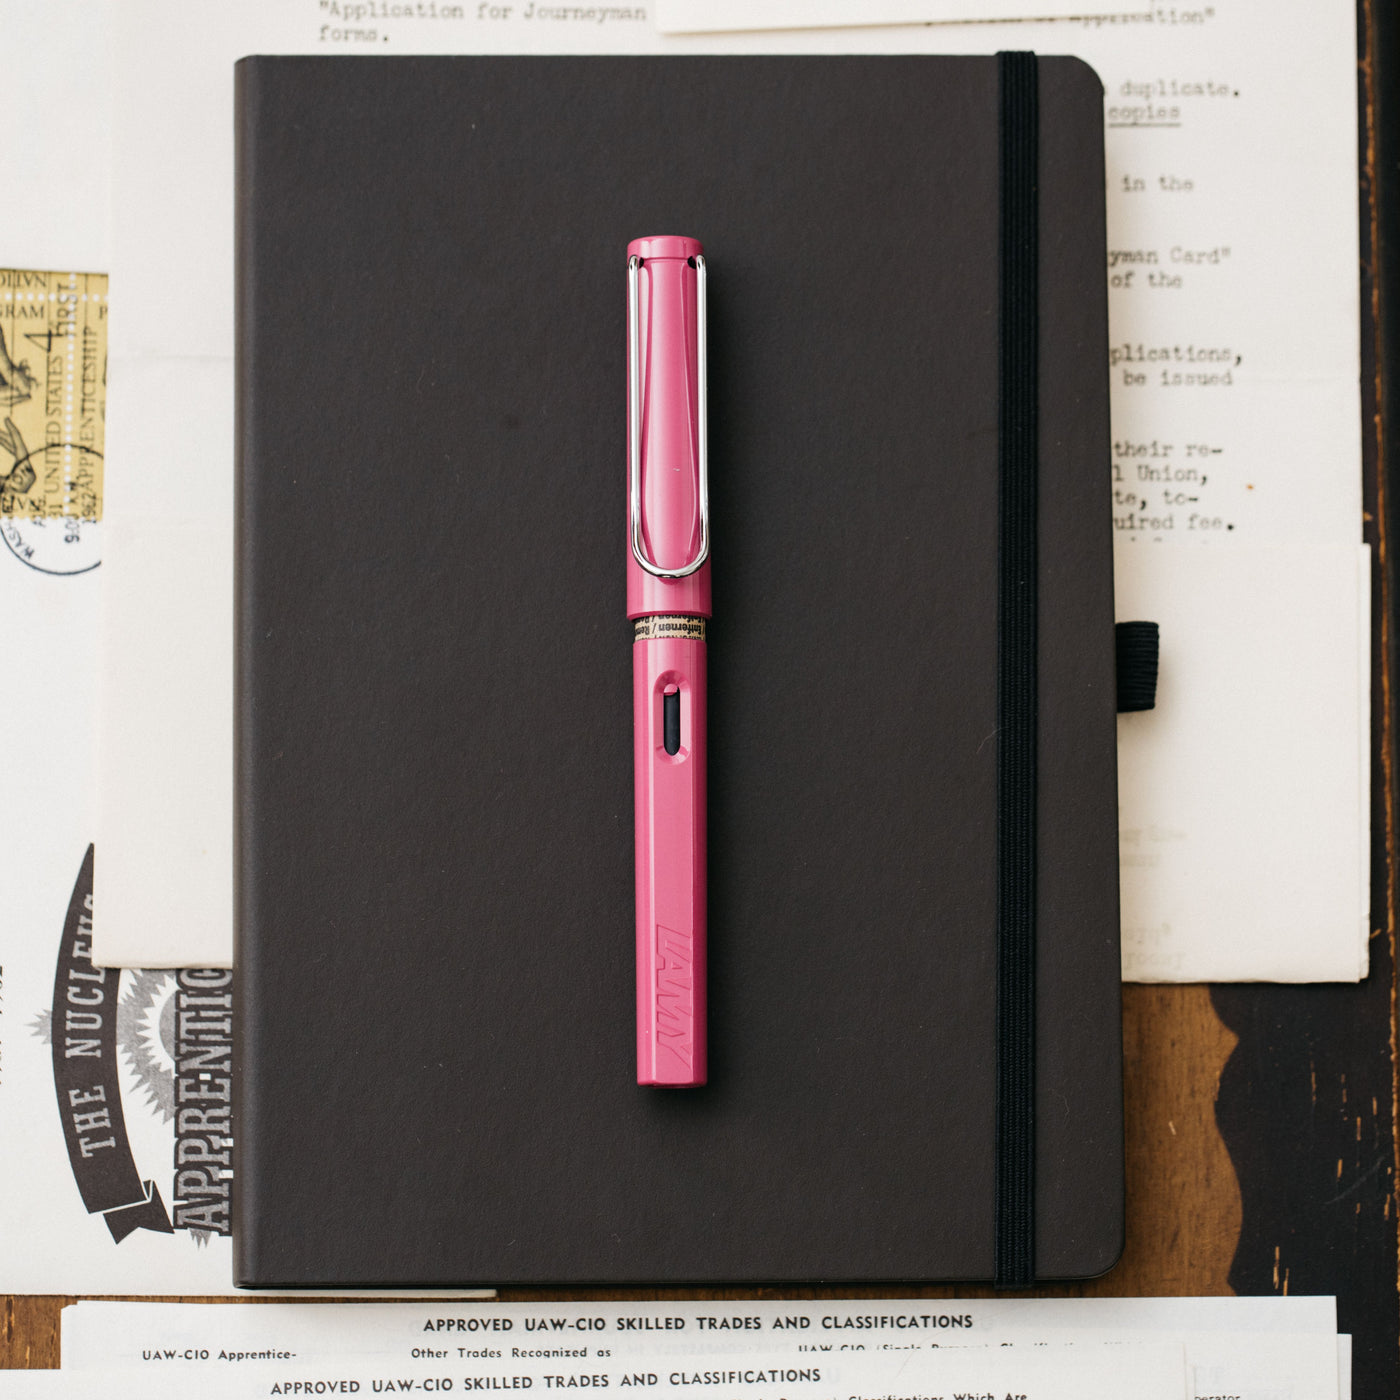 Lamy Safari Bright Shiny Pink Fountain Pen